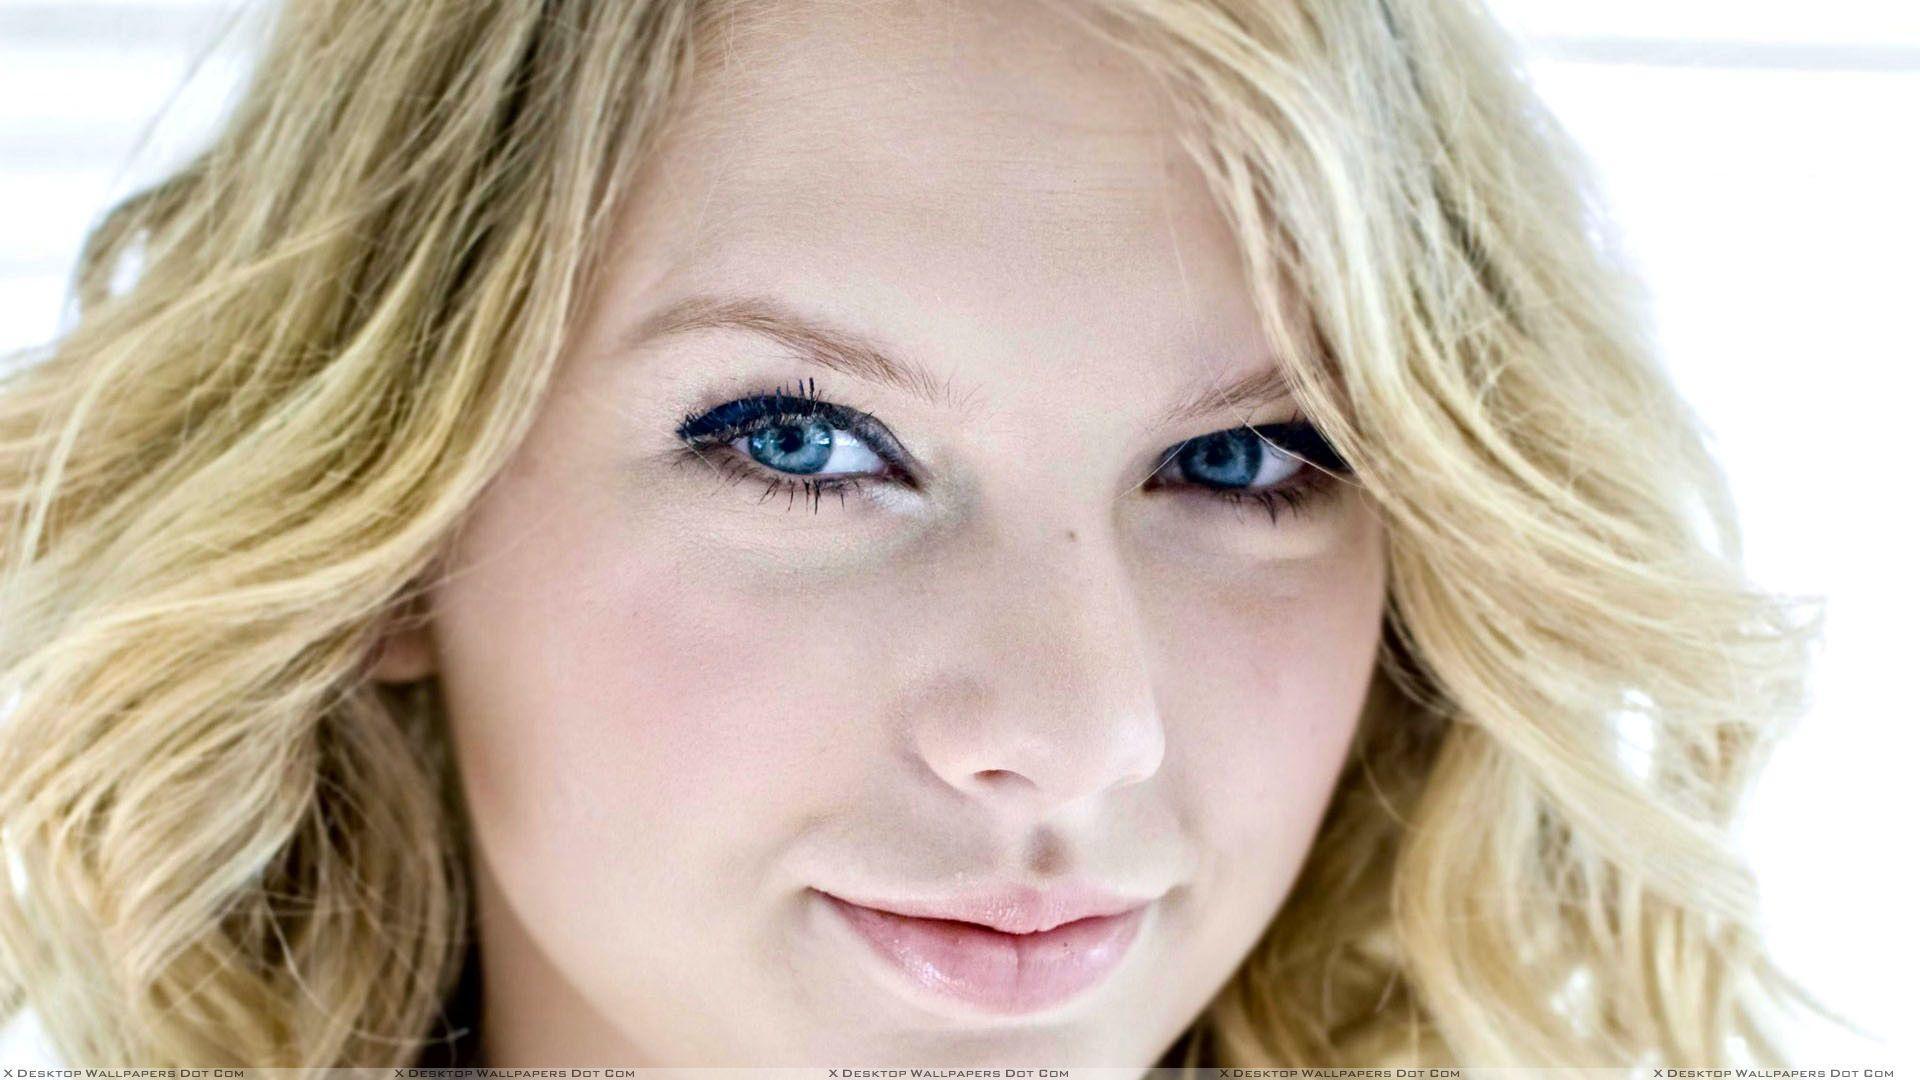 Taylor Swift Wallpaper, Photo & Image in HD